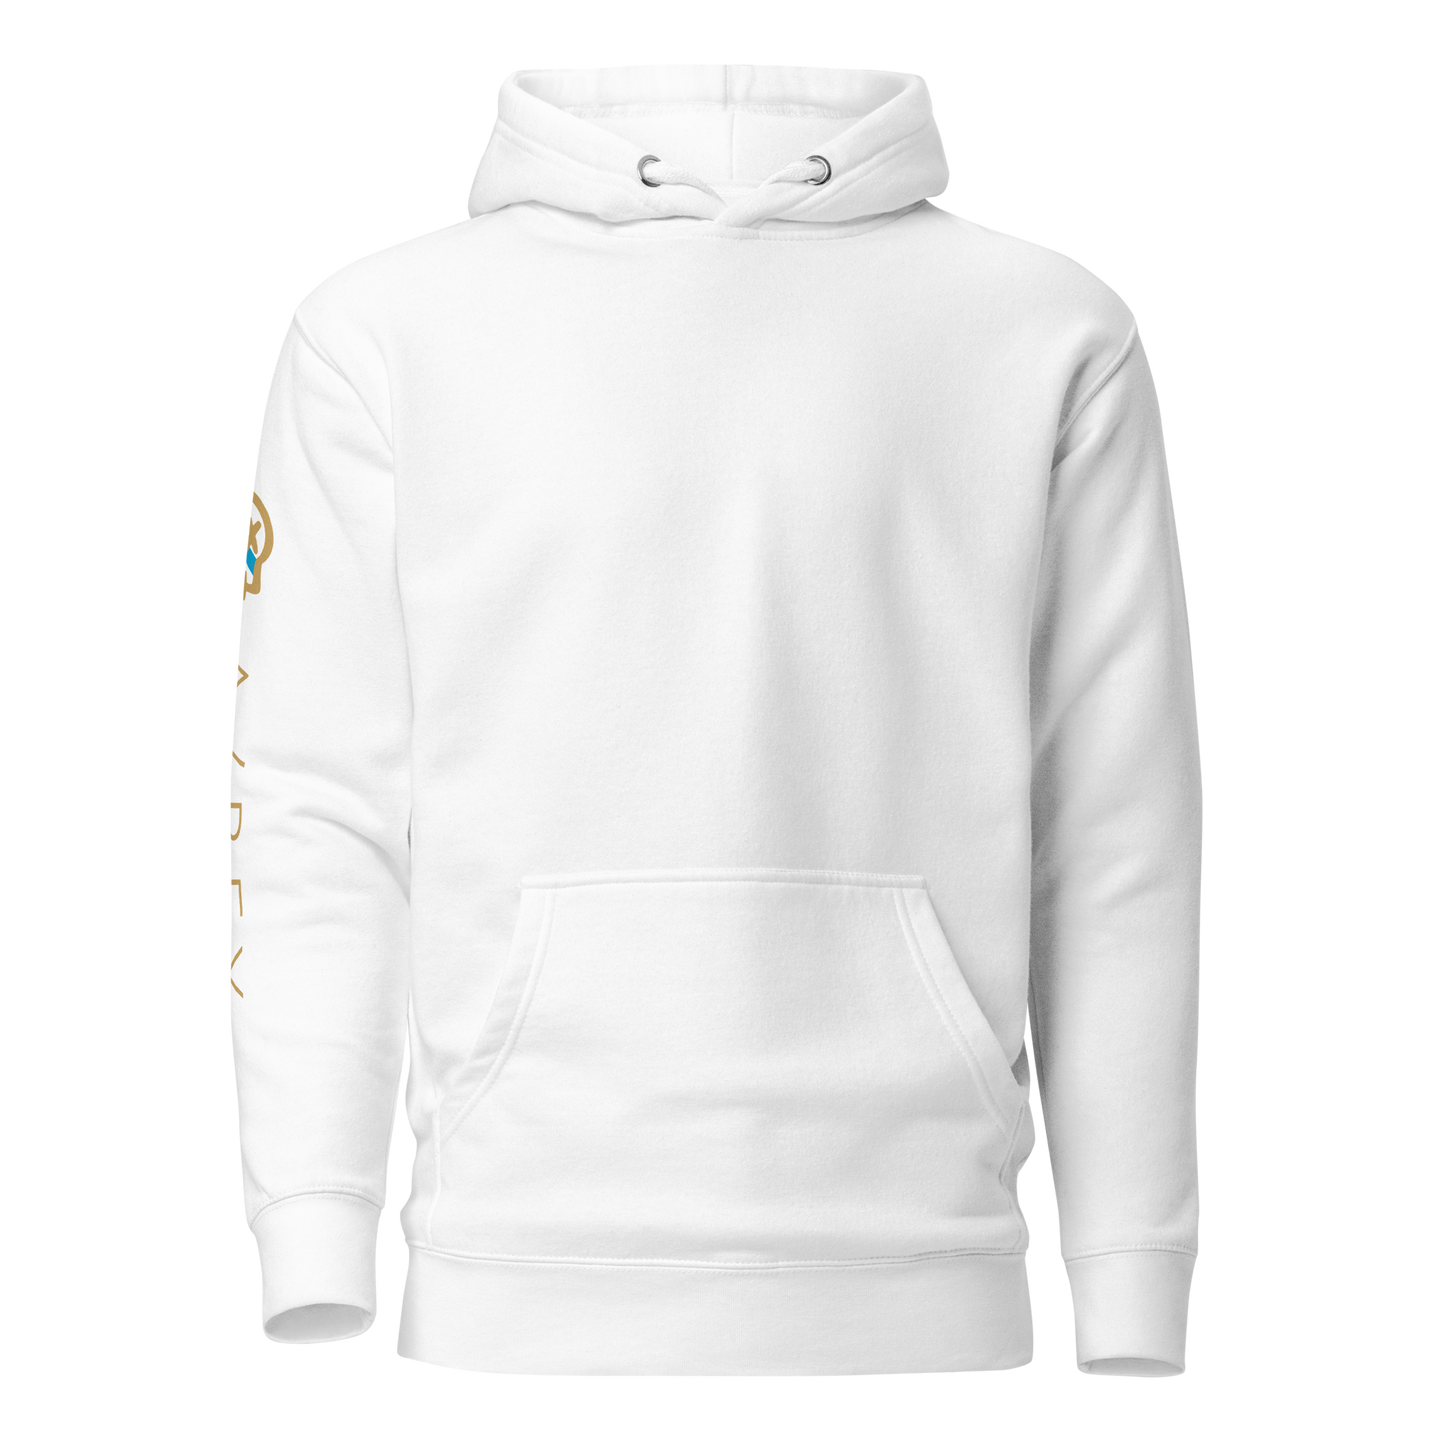 Sweatshirt # A/REY PASANTES x COSTA DA MORTE // Premium Hoodie with Hood and Pocket // Unisex